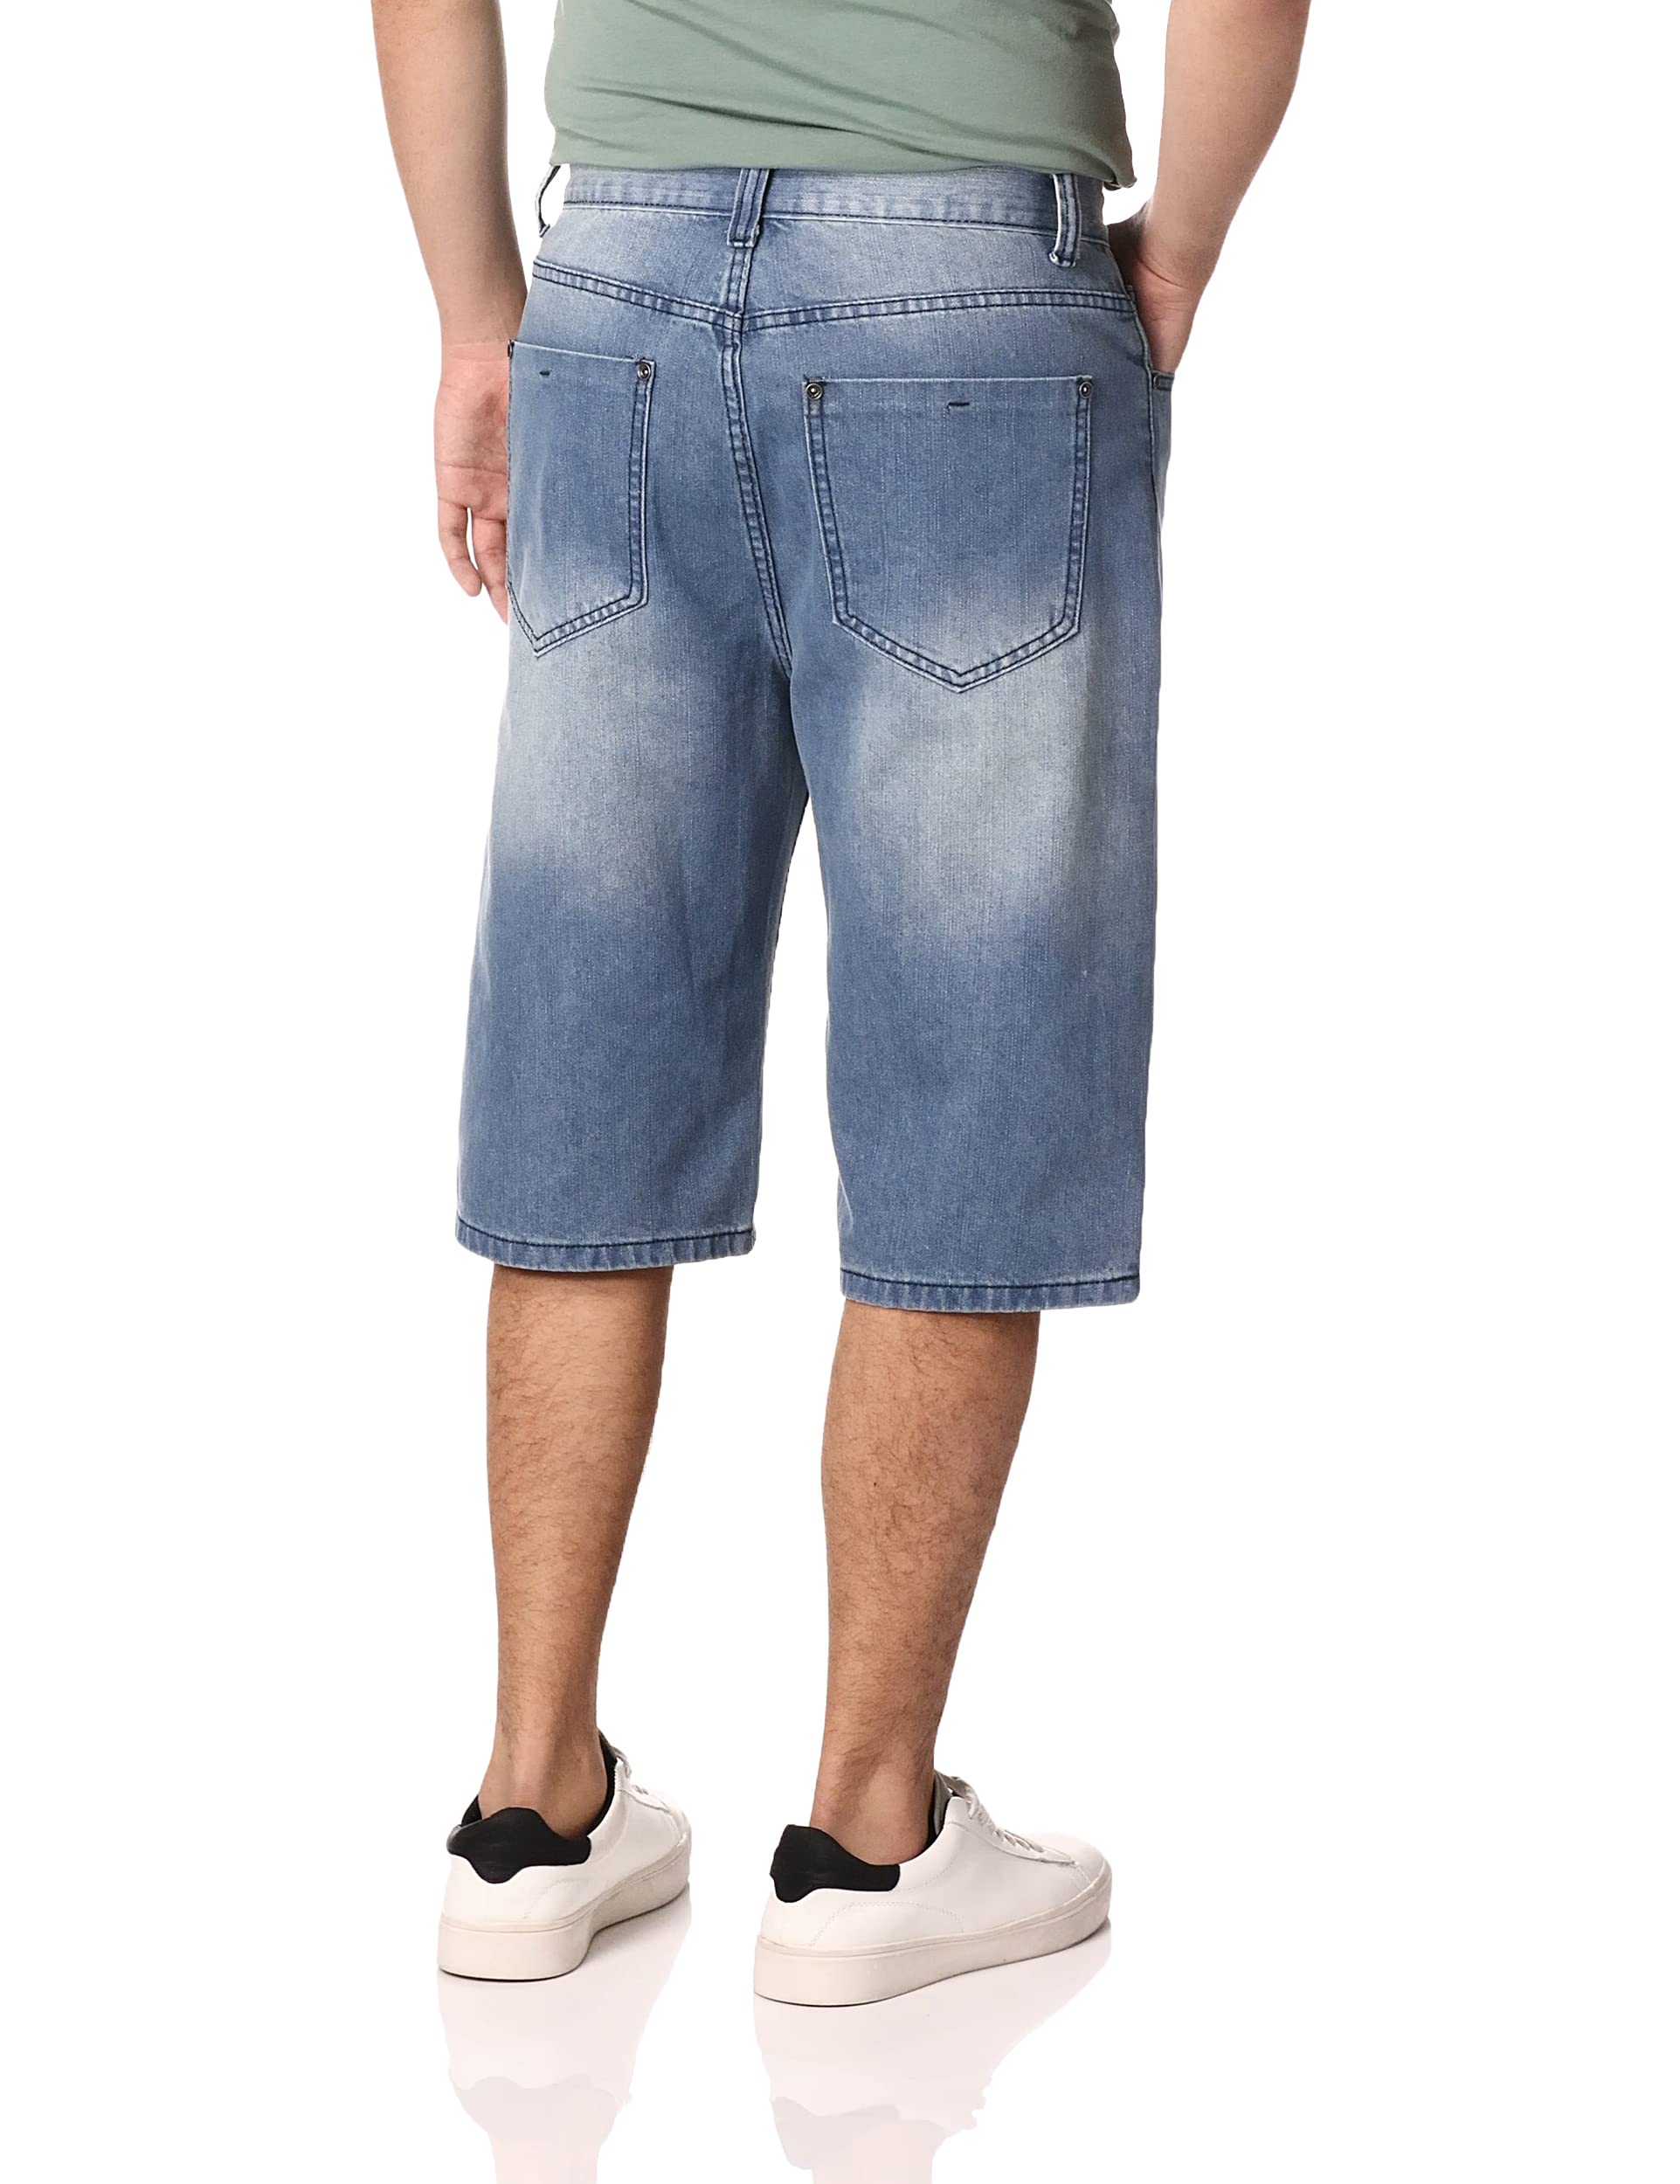 Southpole Men's Regular Fit Cross Hatch Basic Denim Shorts